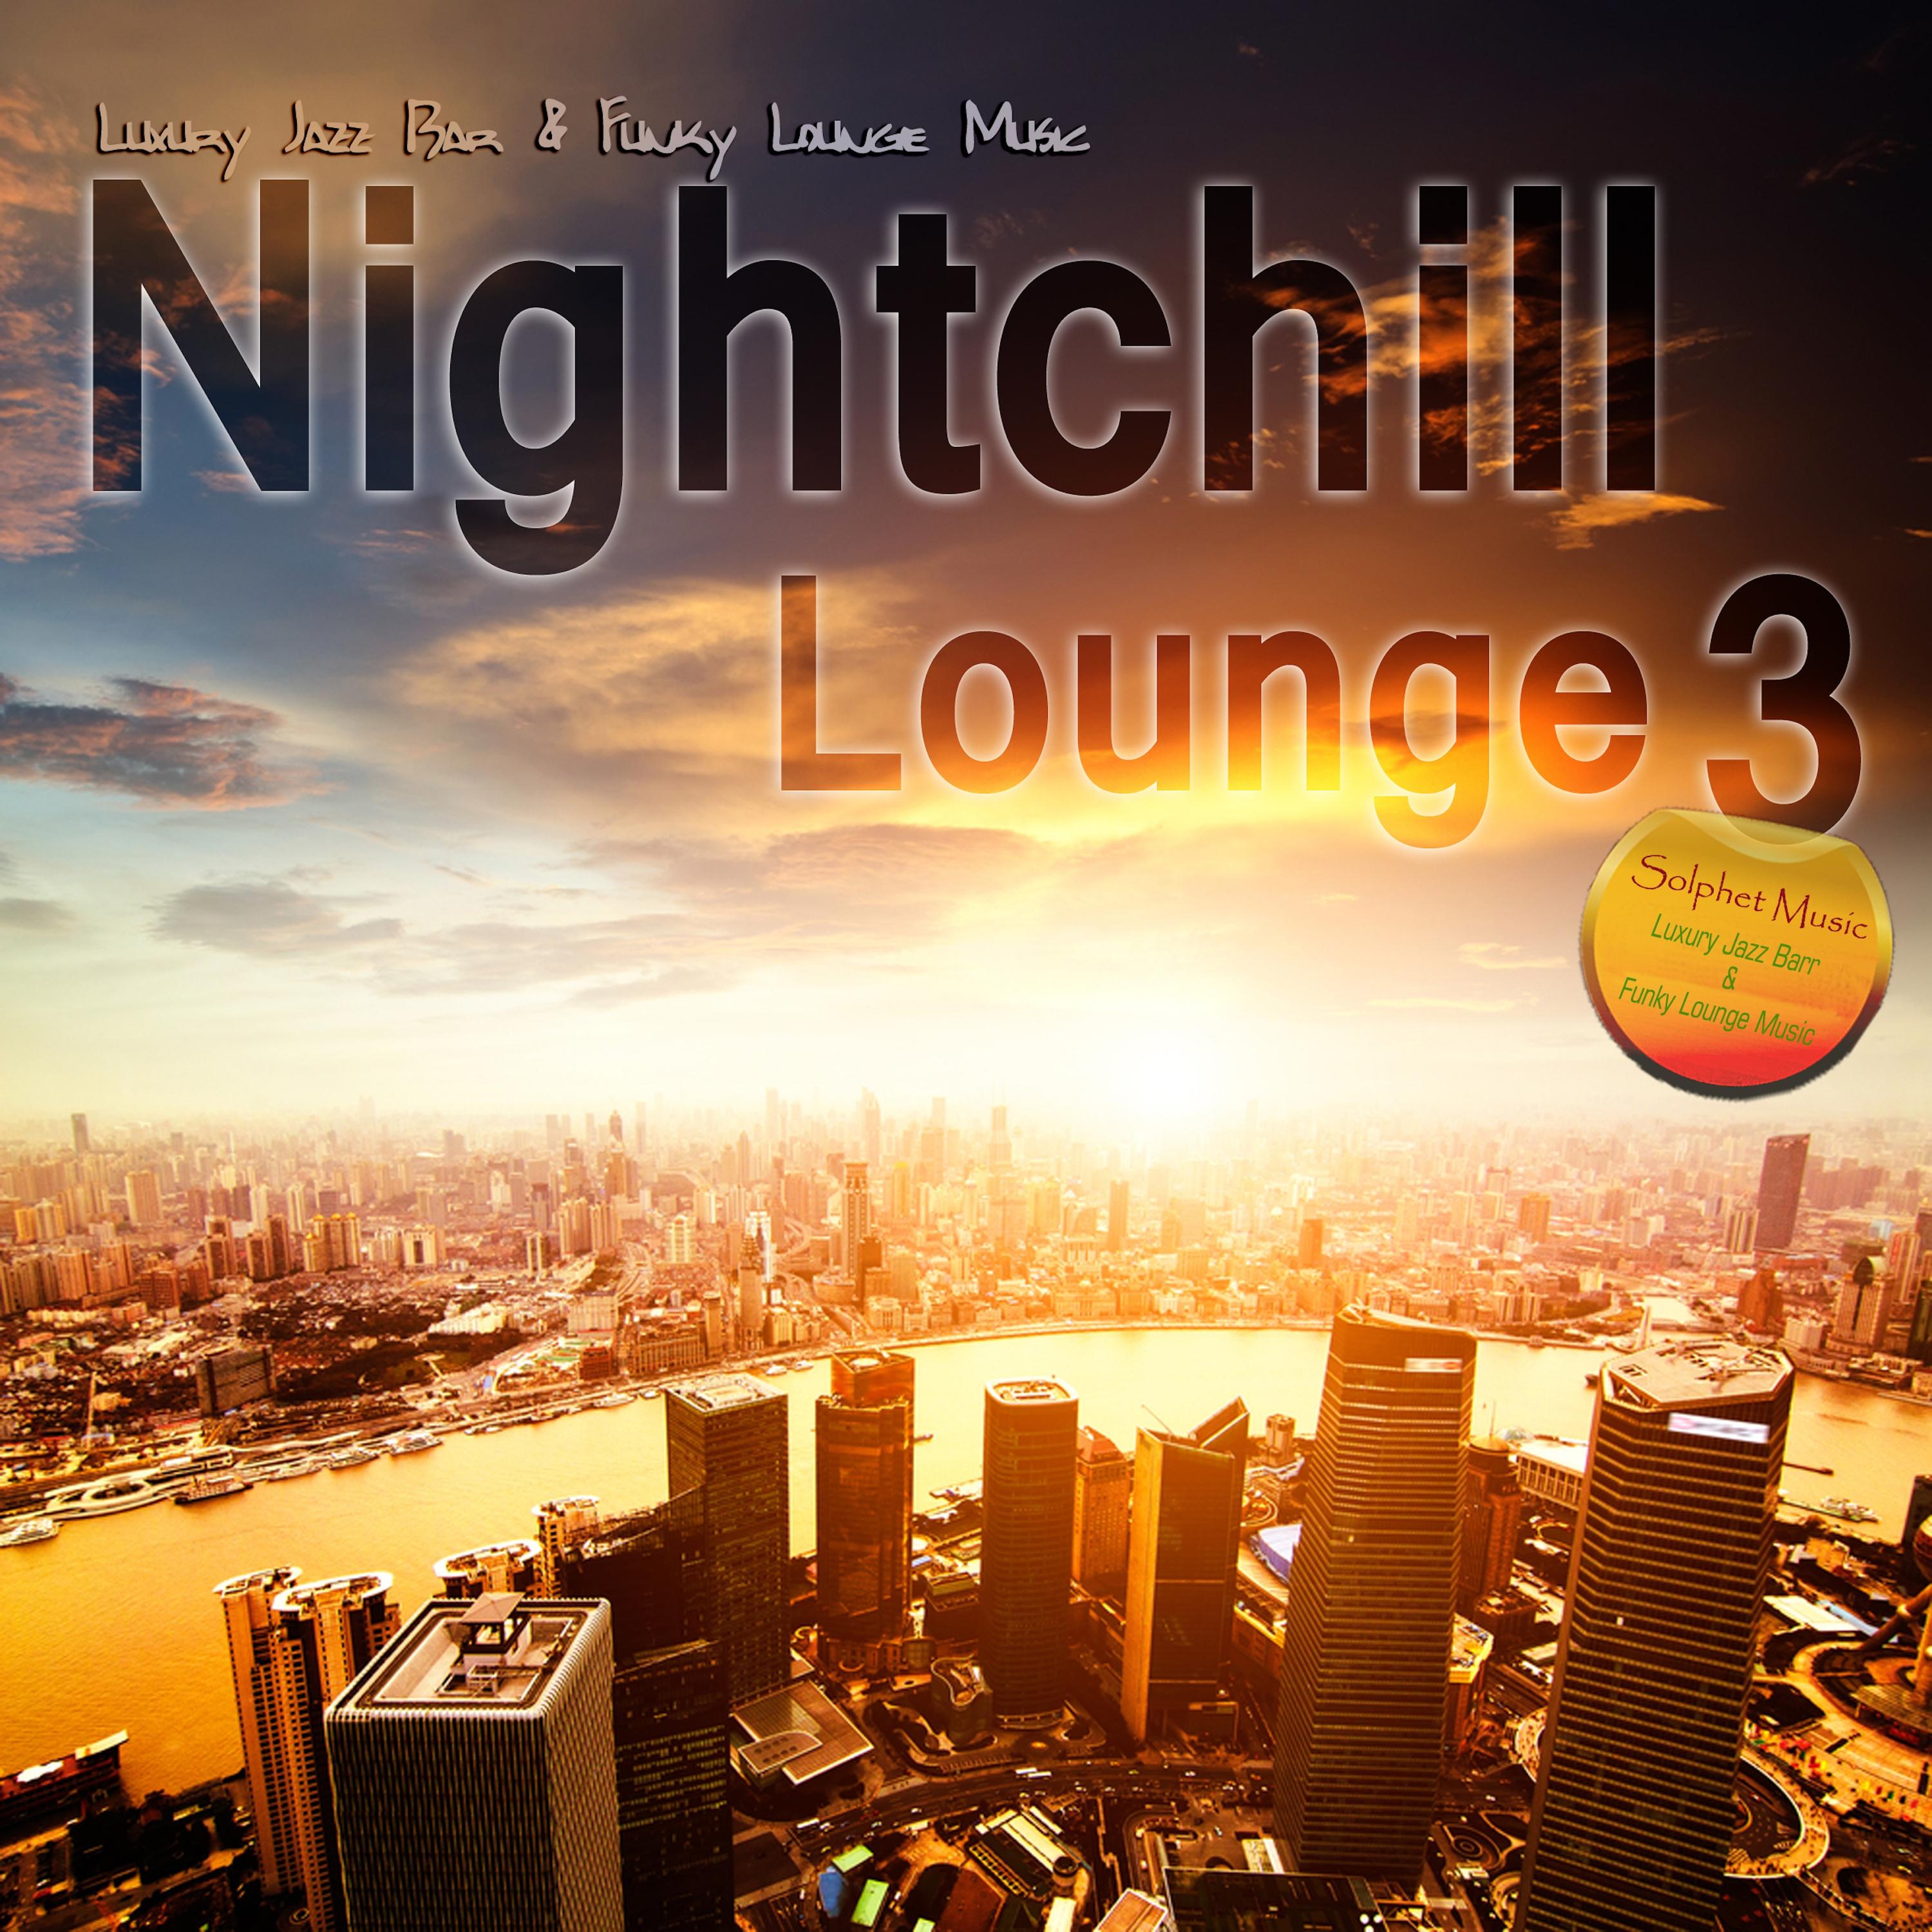 Nightchill Lounge 3 (Luxury Jazz Bar & Funky Lounge Music)